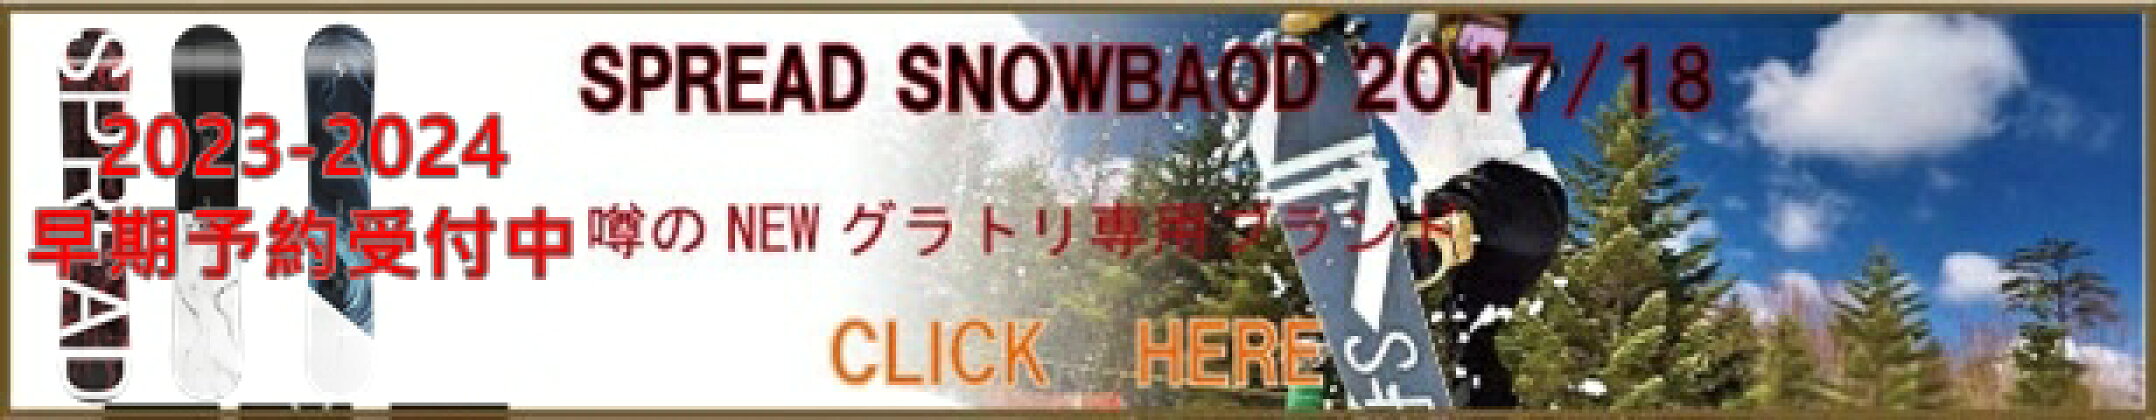 2324spread_snowboard